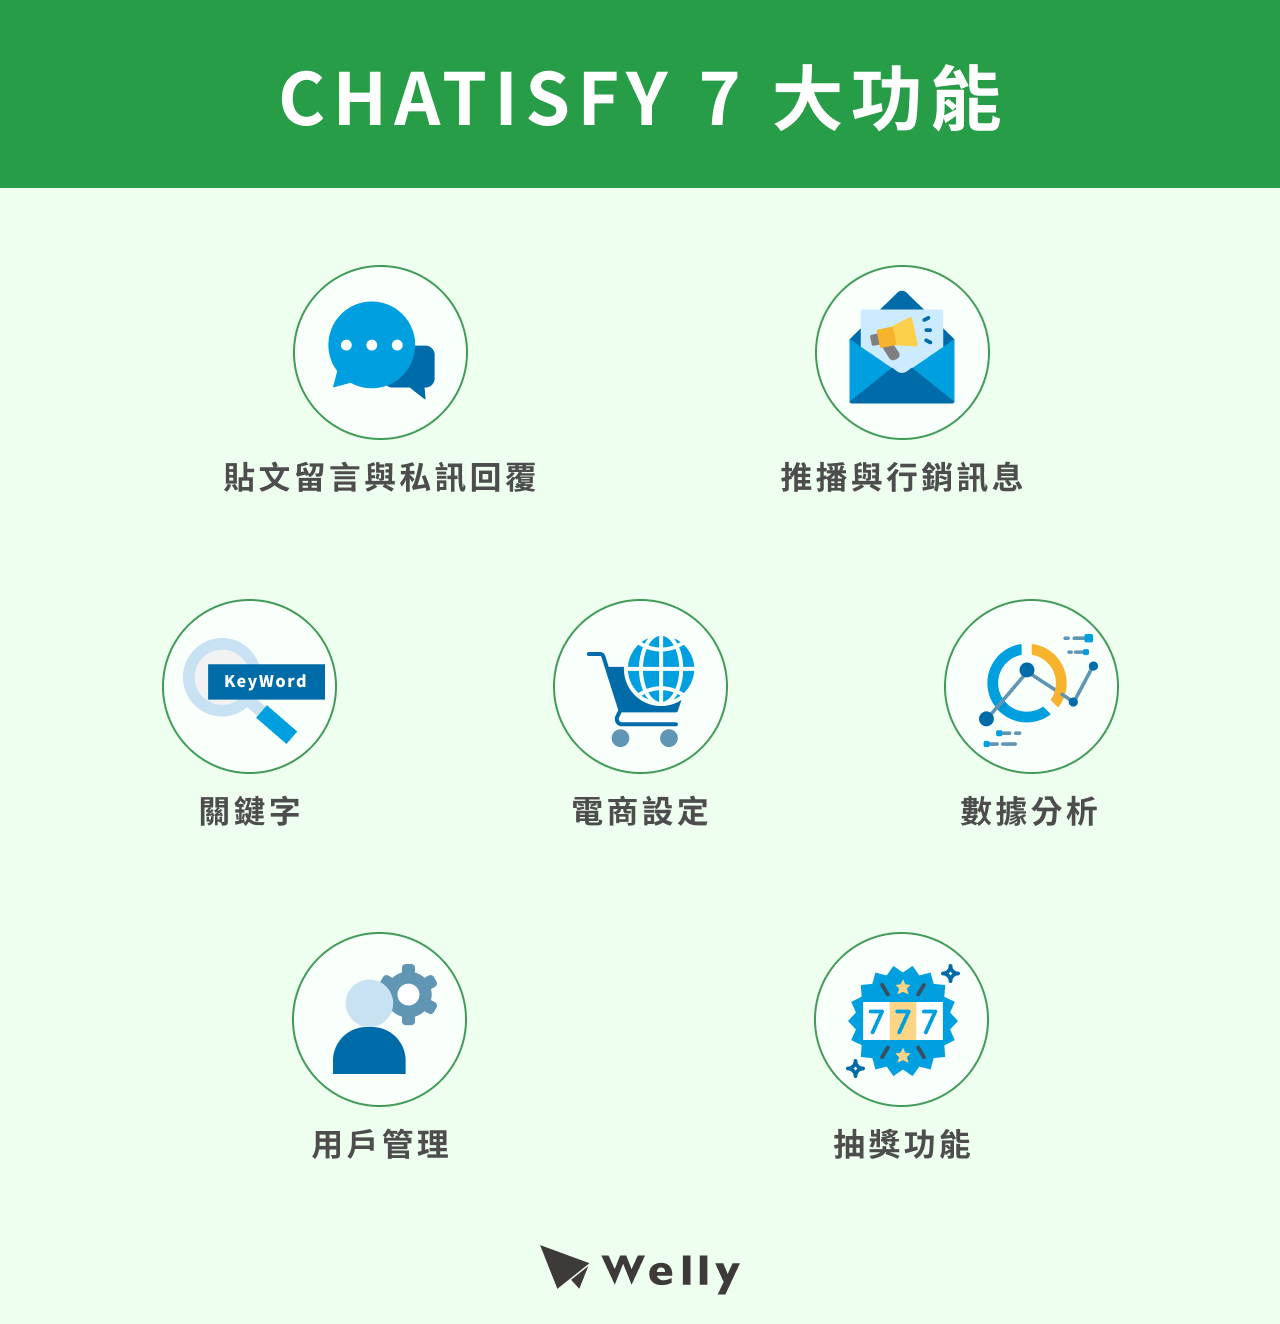 CHATISFY 7 大功能